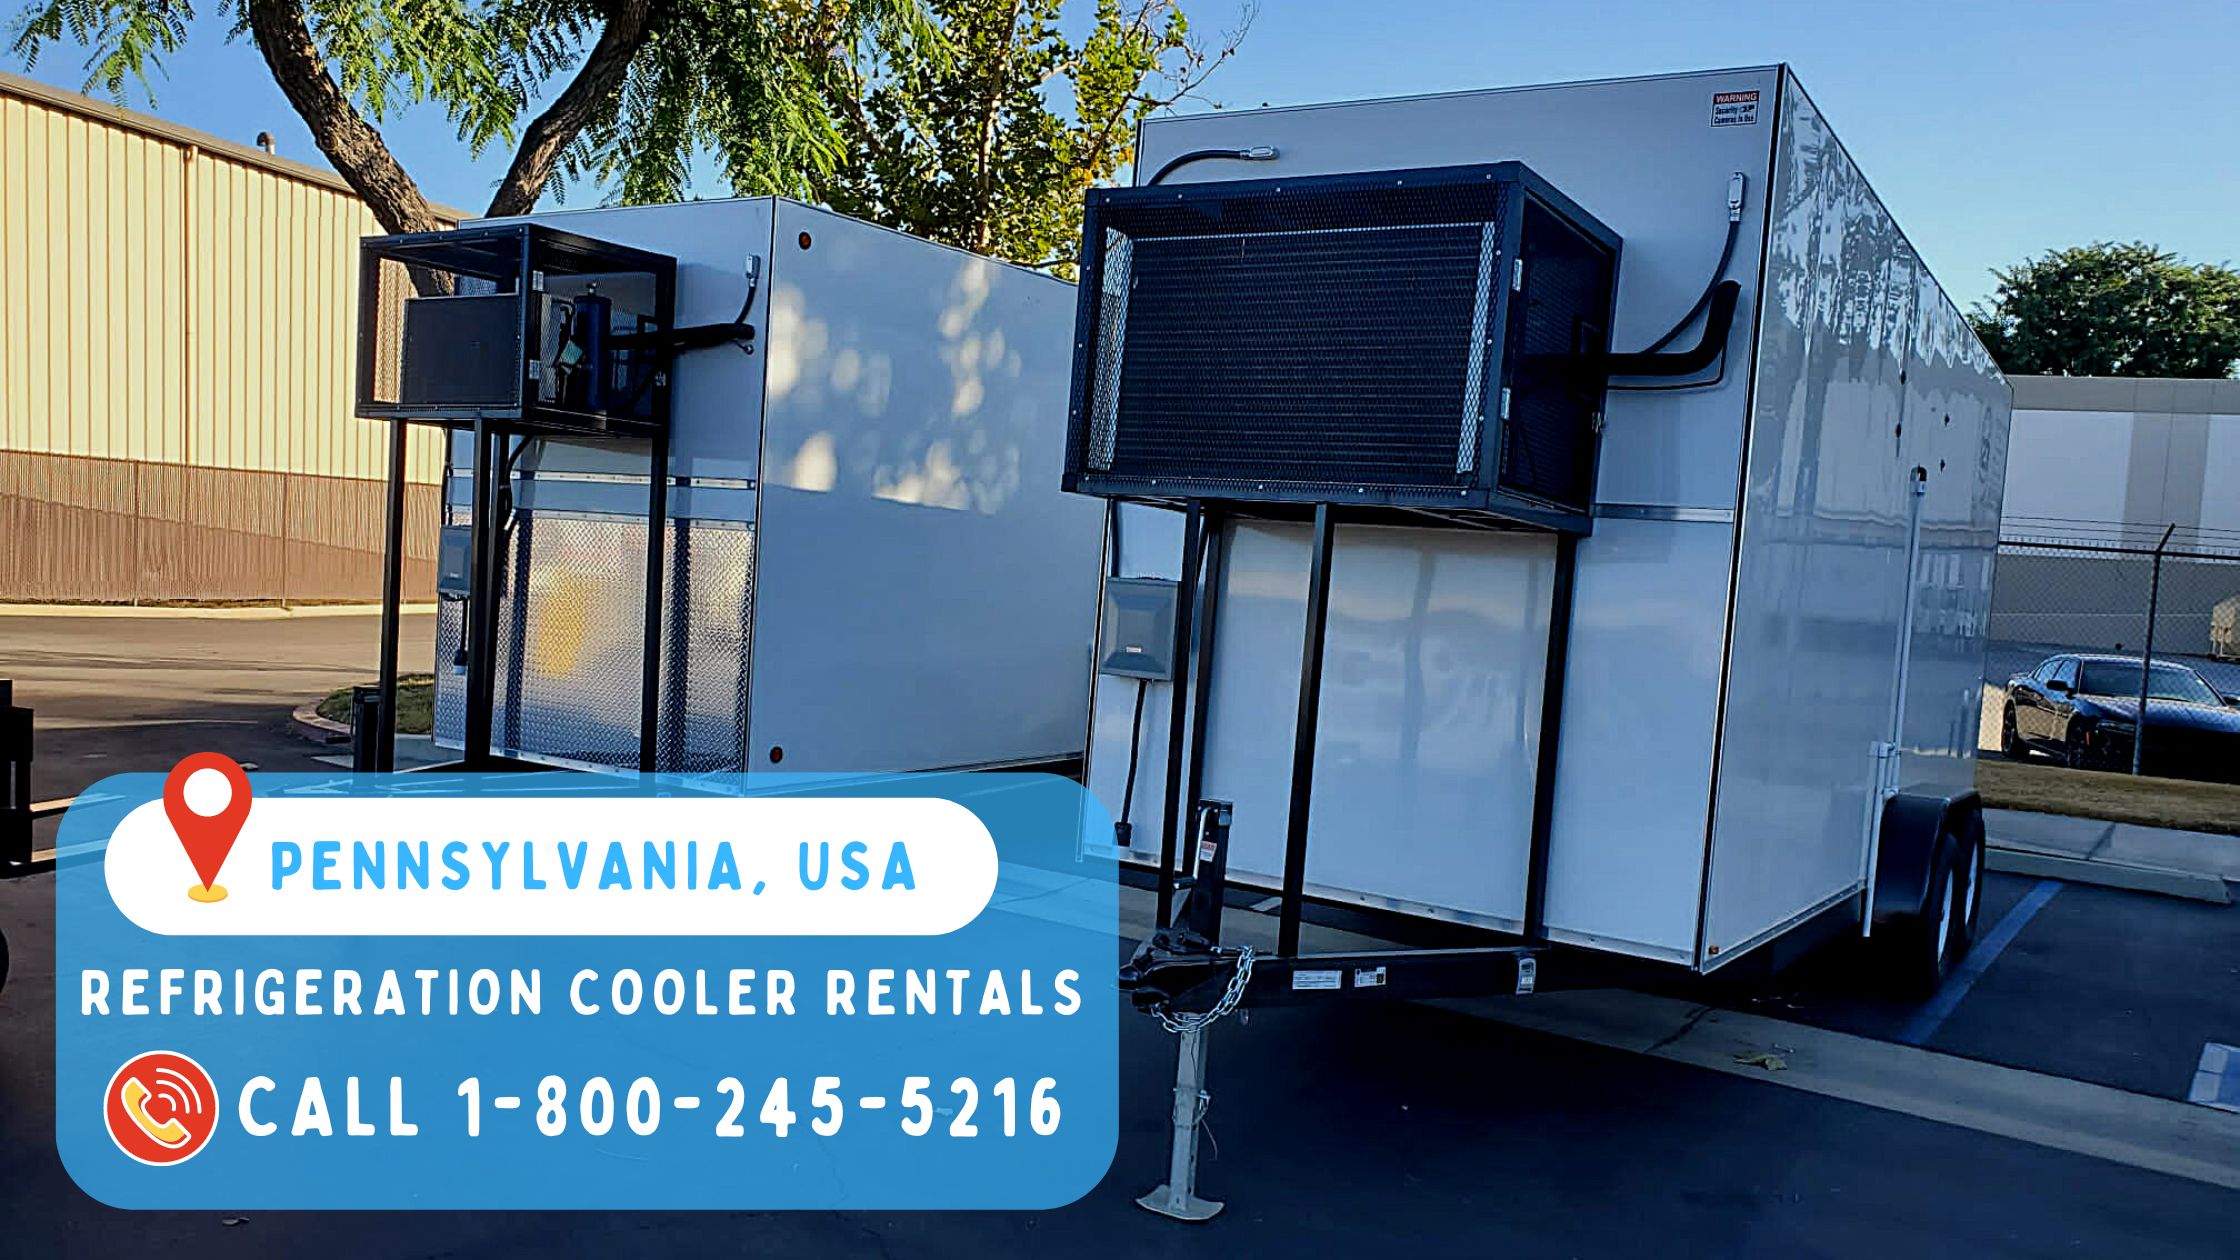 Refrigeration Cooler Rentals in Pennsylvania